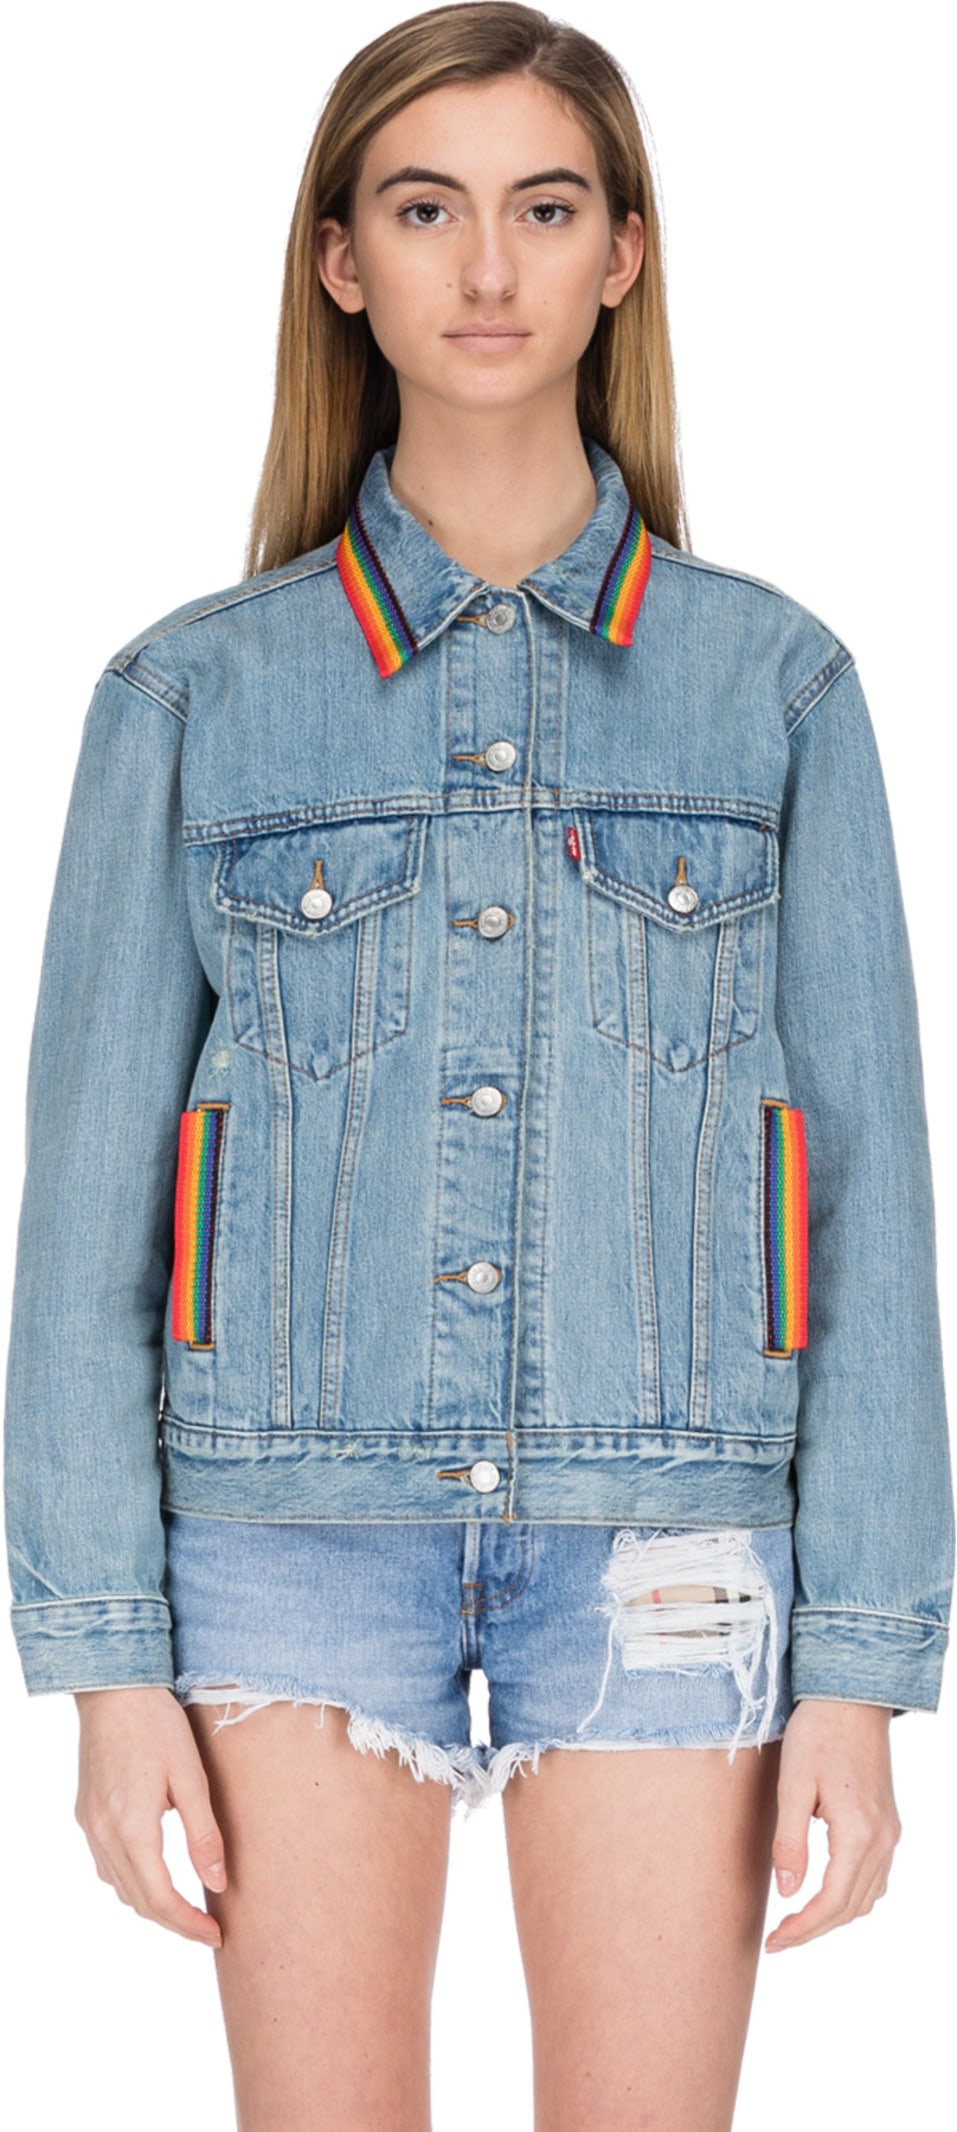 levis rainbow jacket